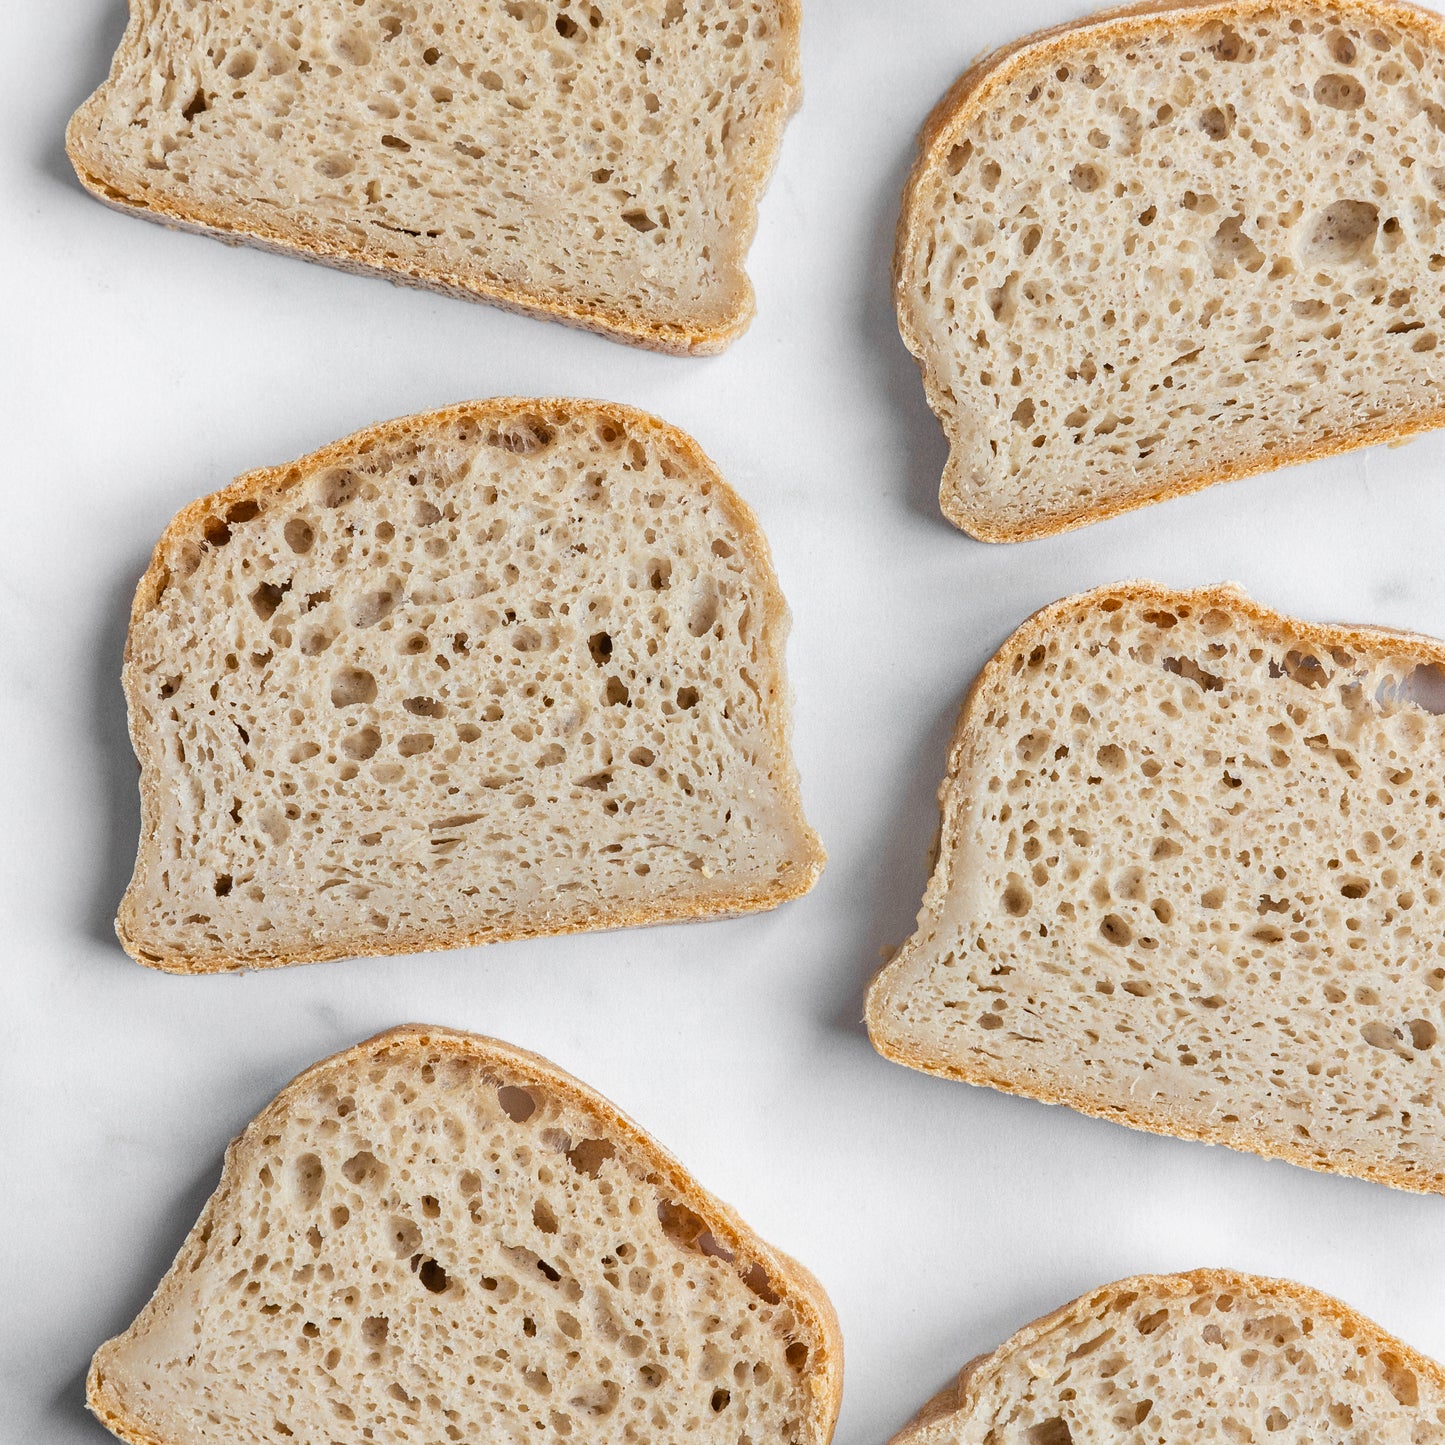 Buckwheat yeast bread